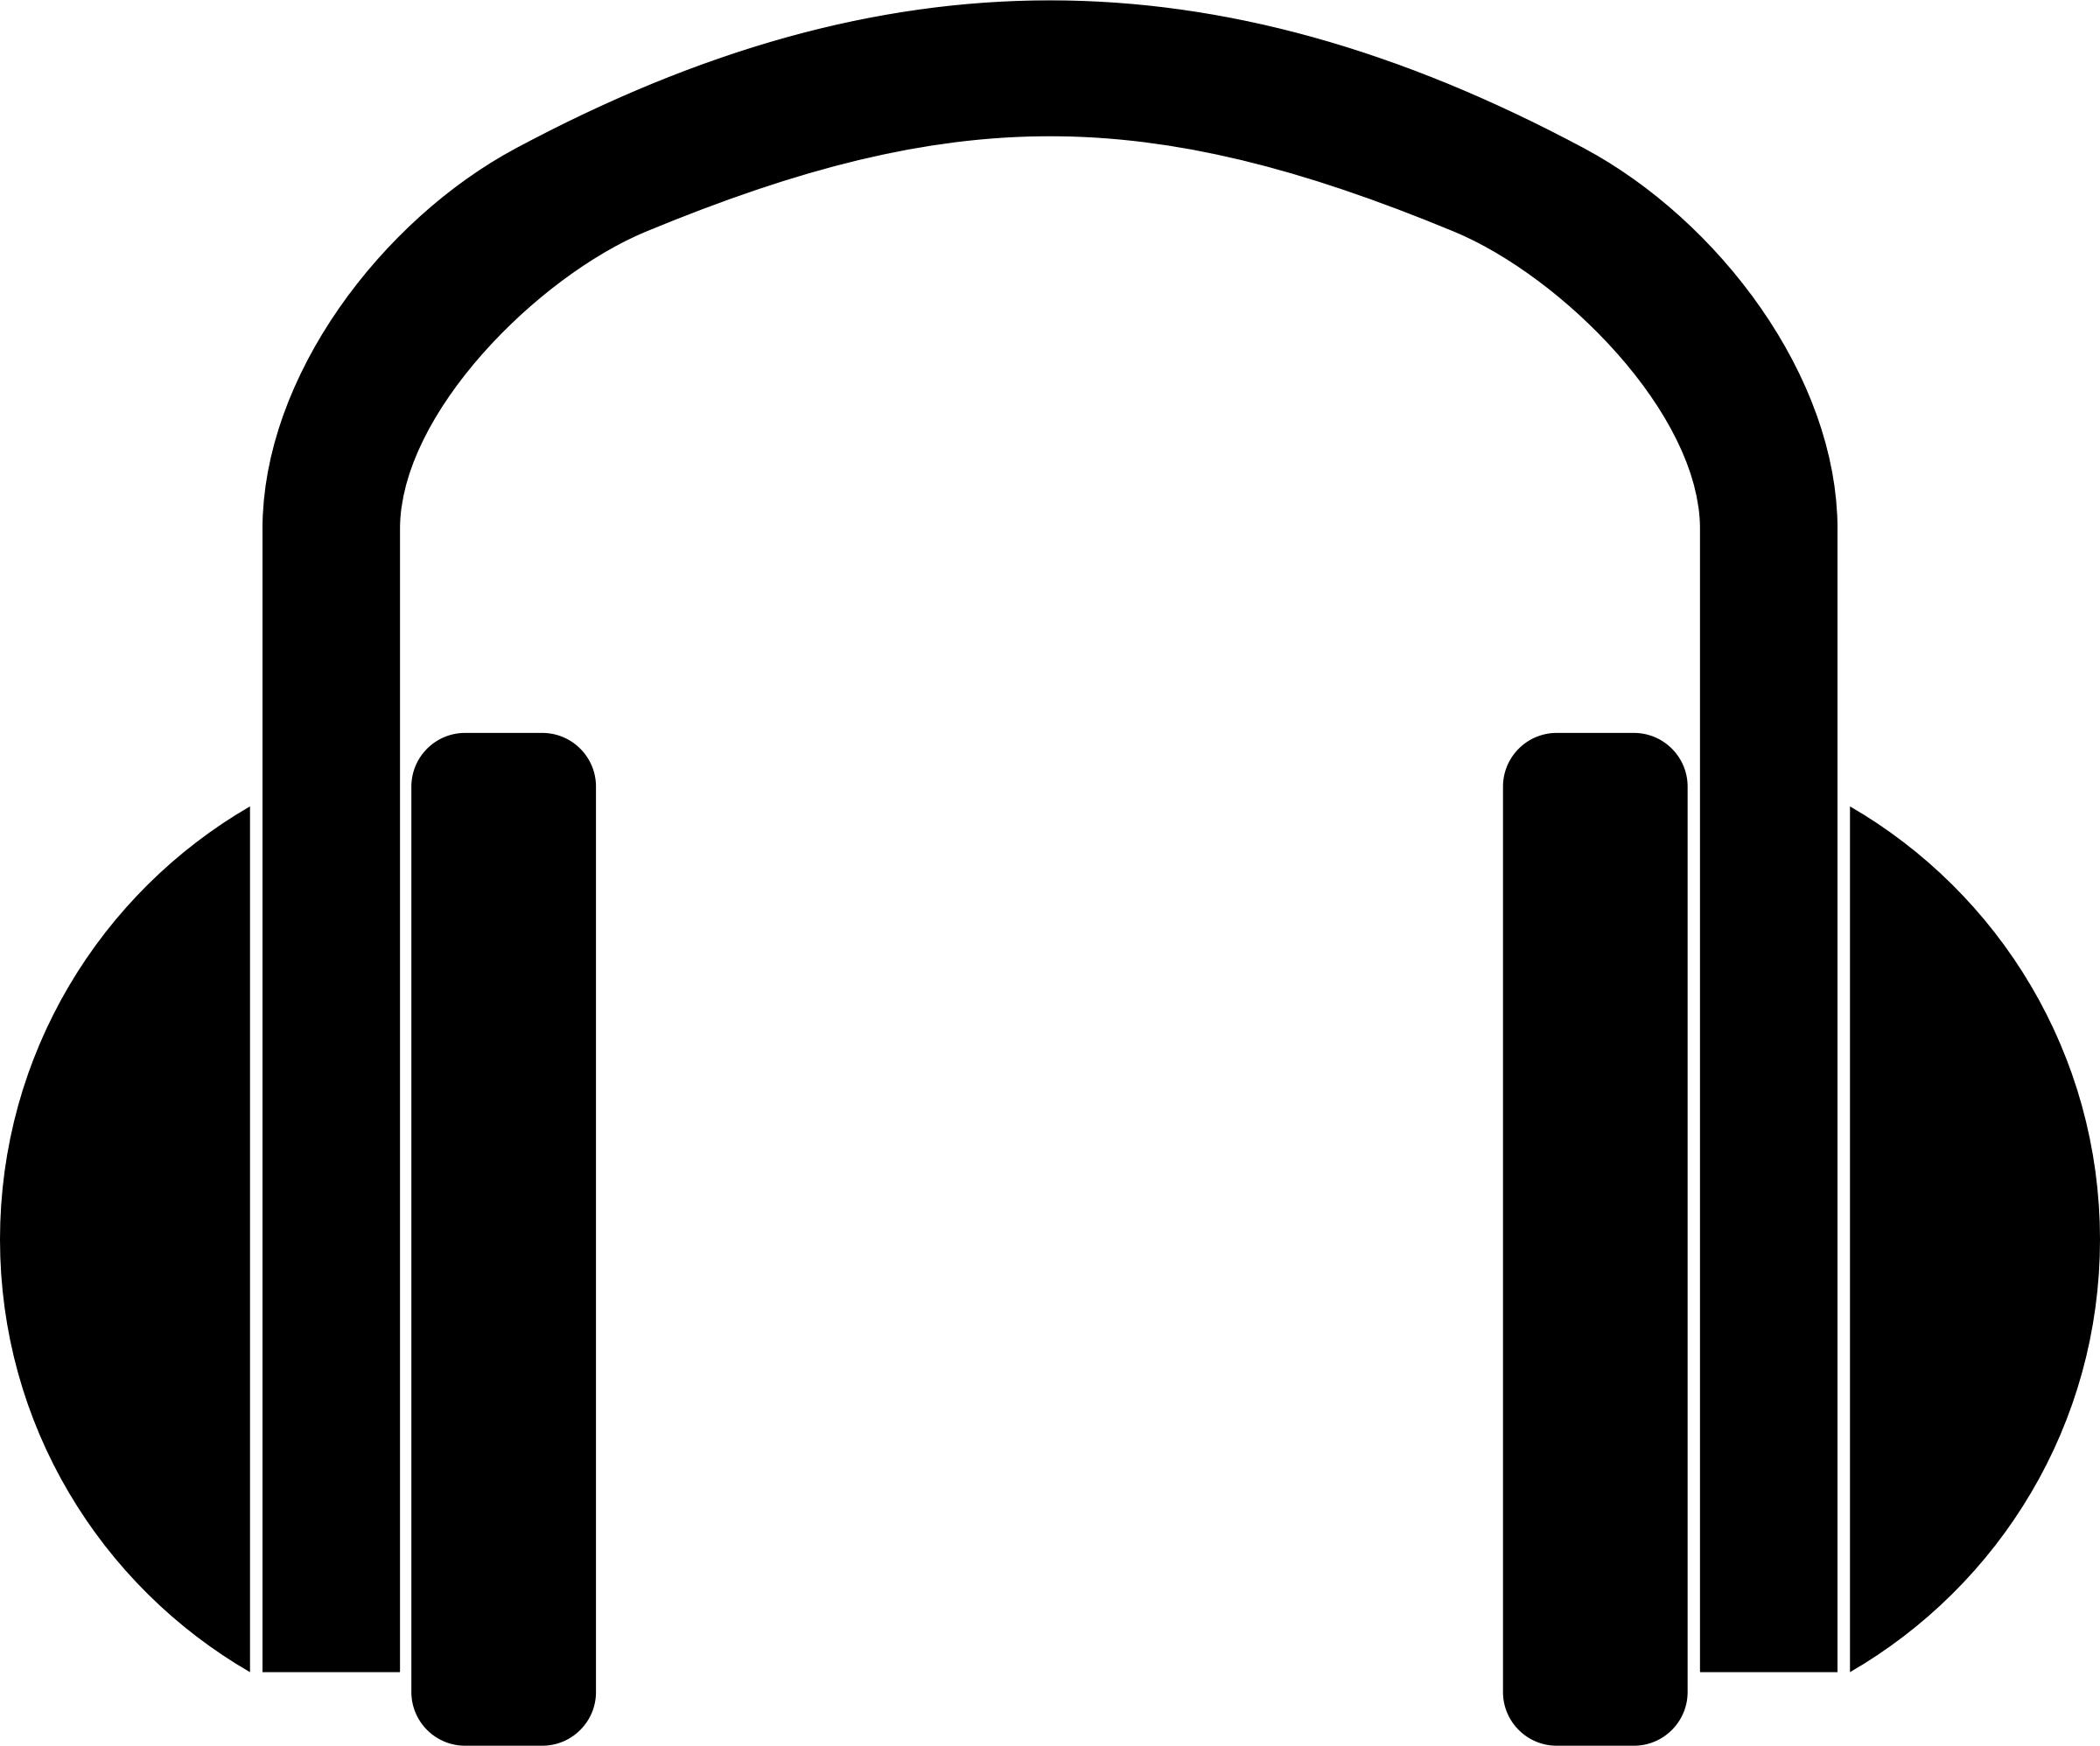 Stylized Headphones icons